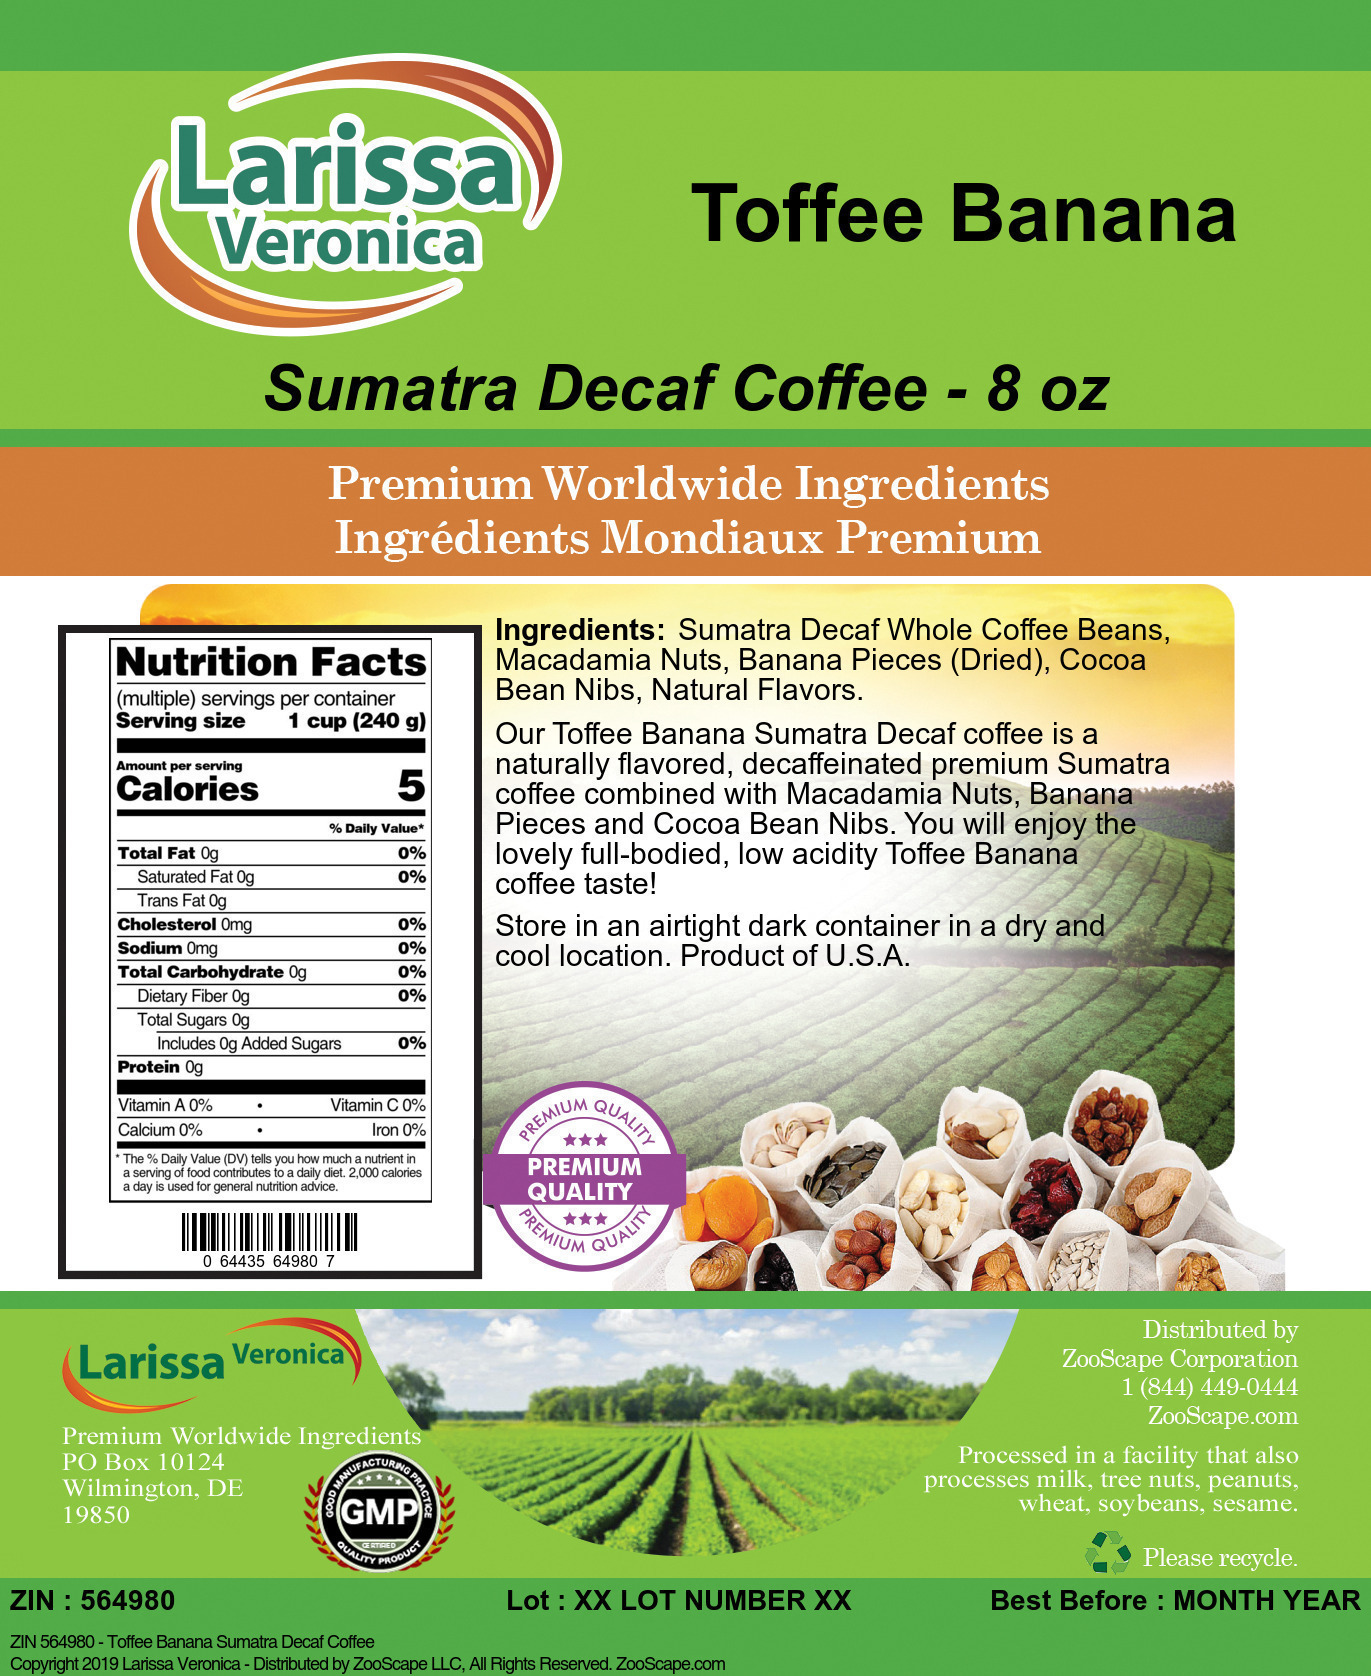 Toffee Banana Sumatra Decaf Coffee - Label